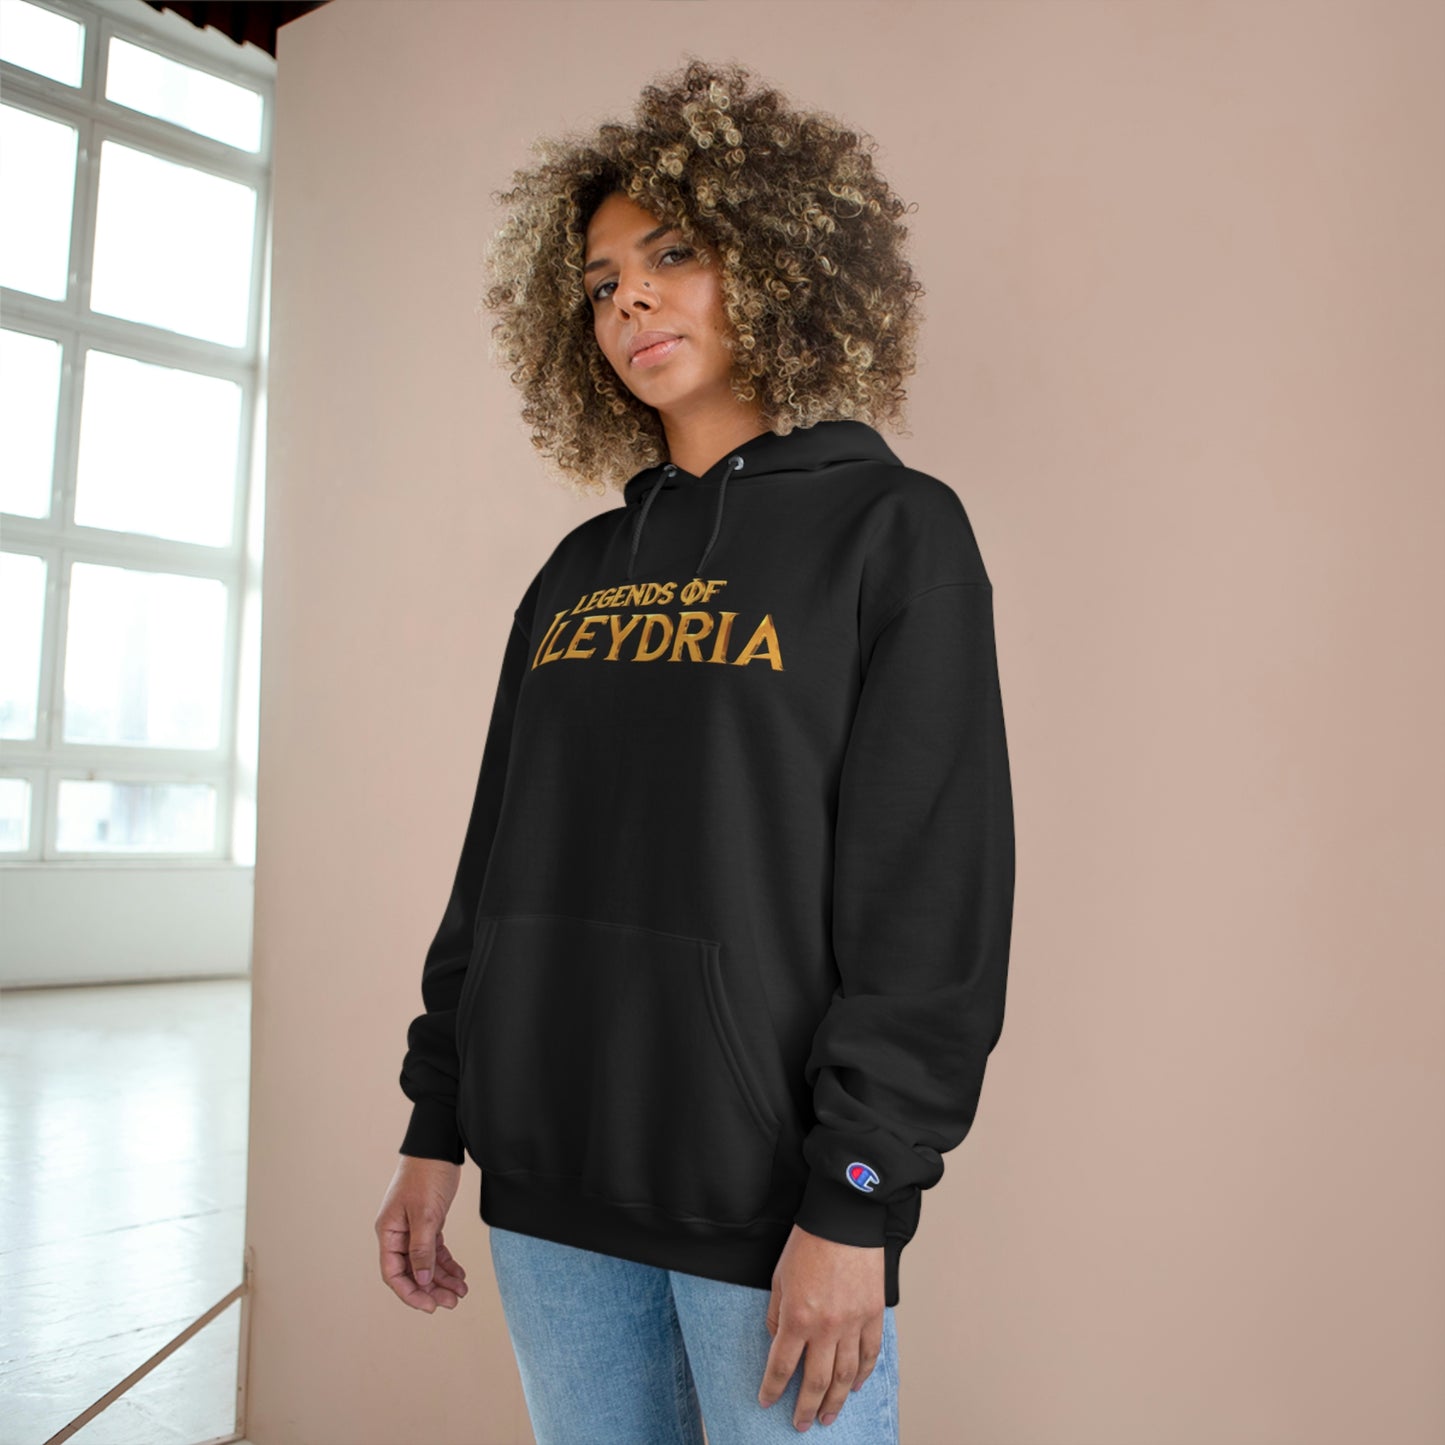 Limited Edition Legends Of Ileydria Movie Hooded Sweatshirt